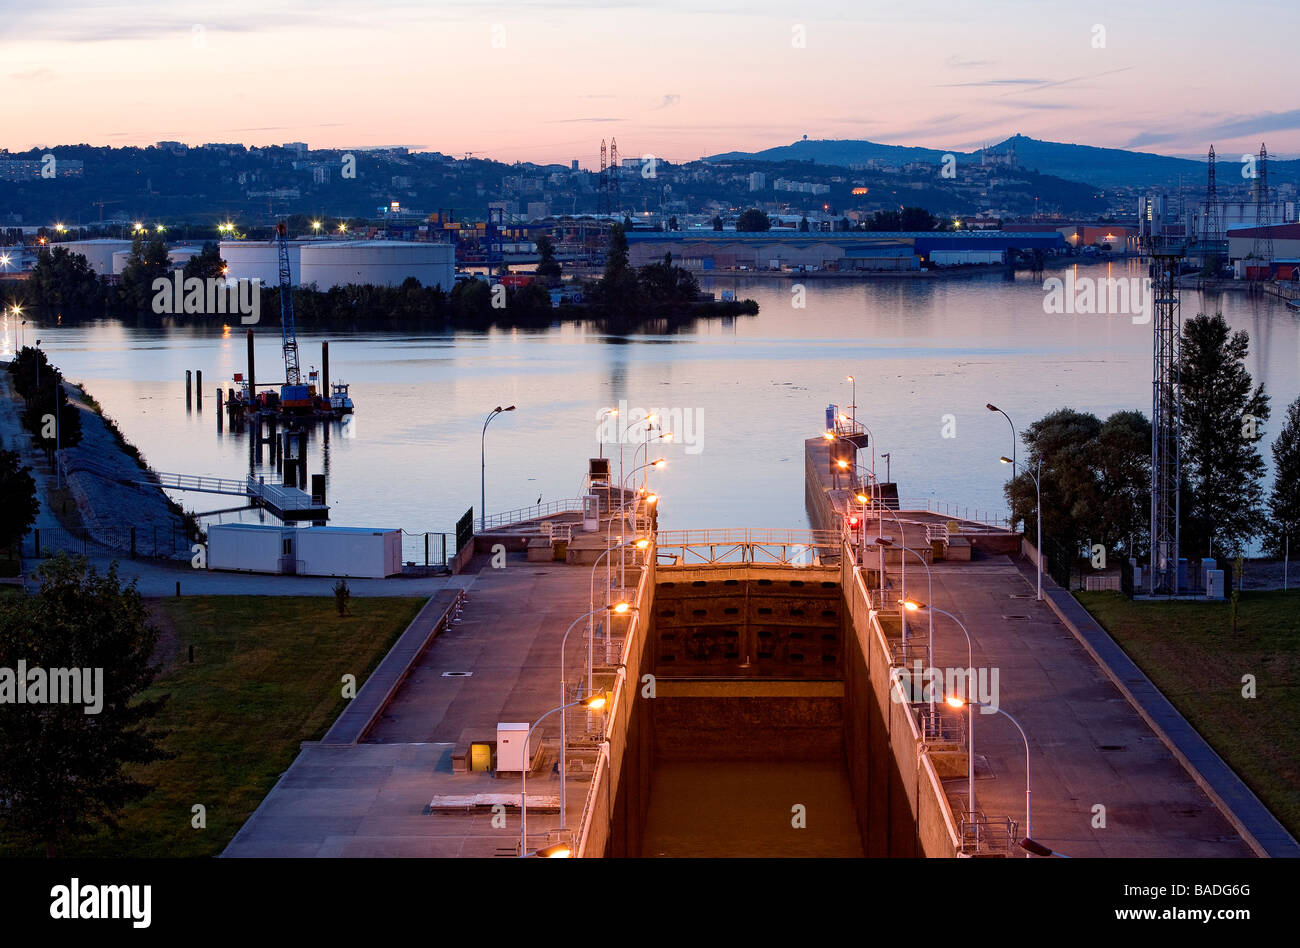 France, Rhone, Lyon, Pierre Benite Lock, Edouard Herriot River Port in the Background Stock Photo